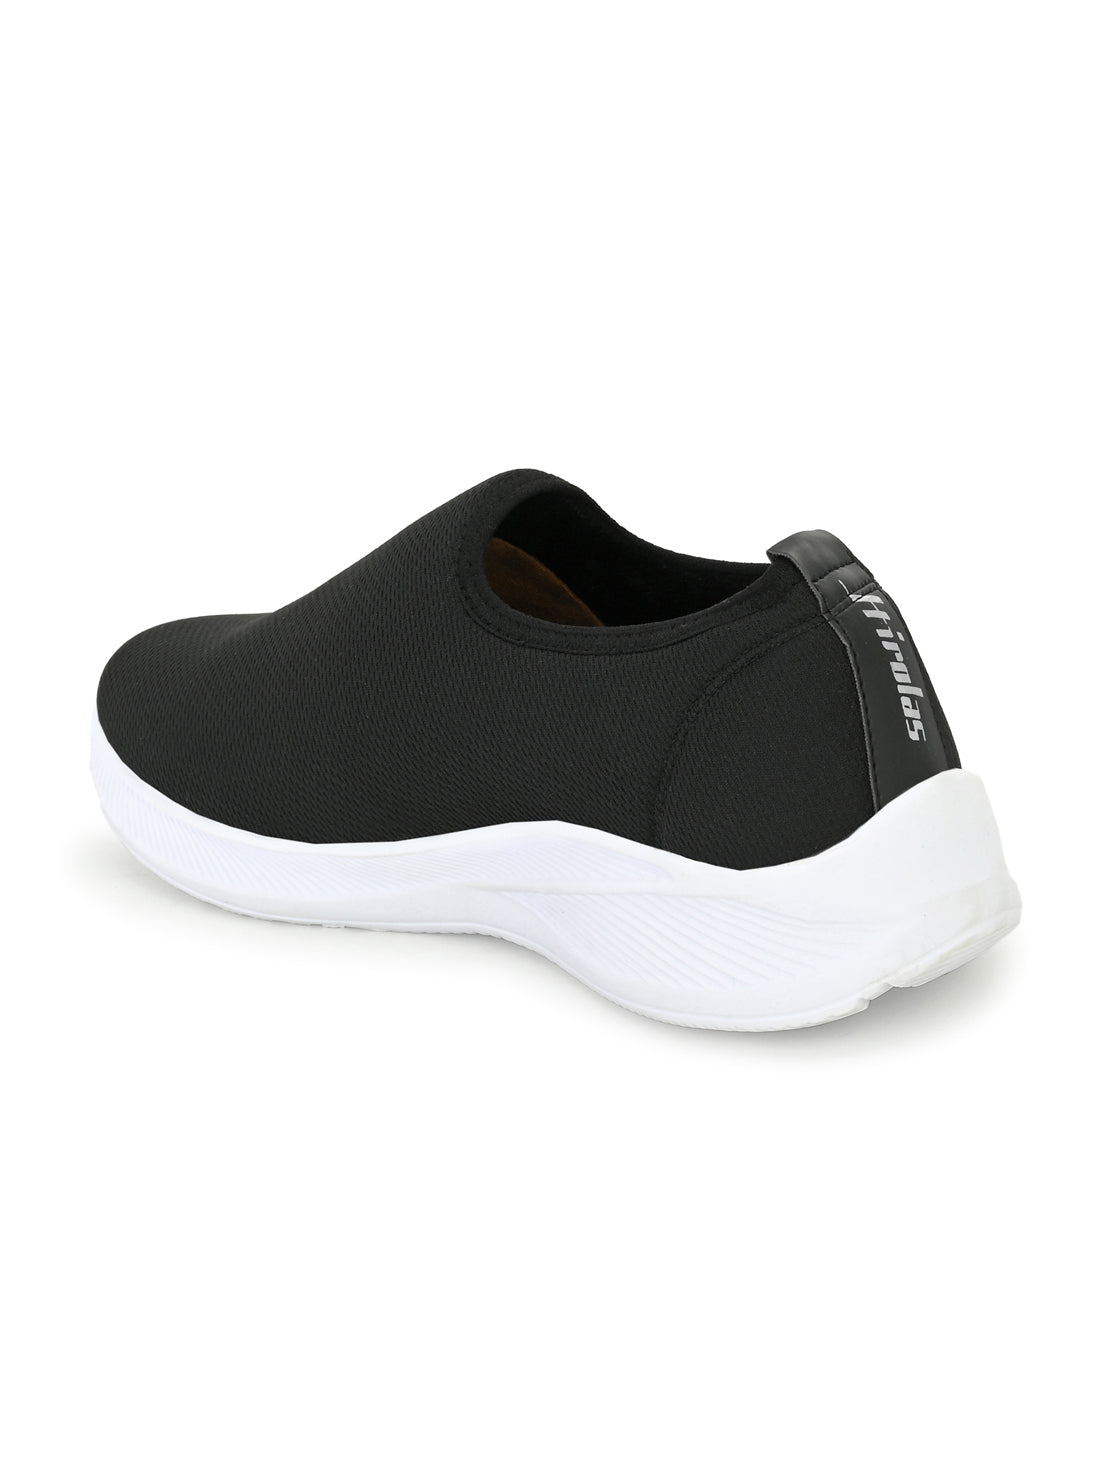 Hirolas® Men's Black Slip On Walking Sport Shoes (HRL1933BLK)